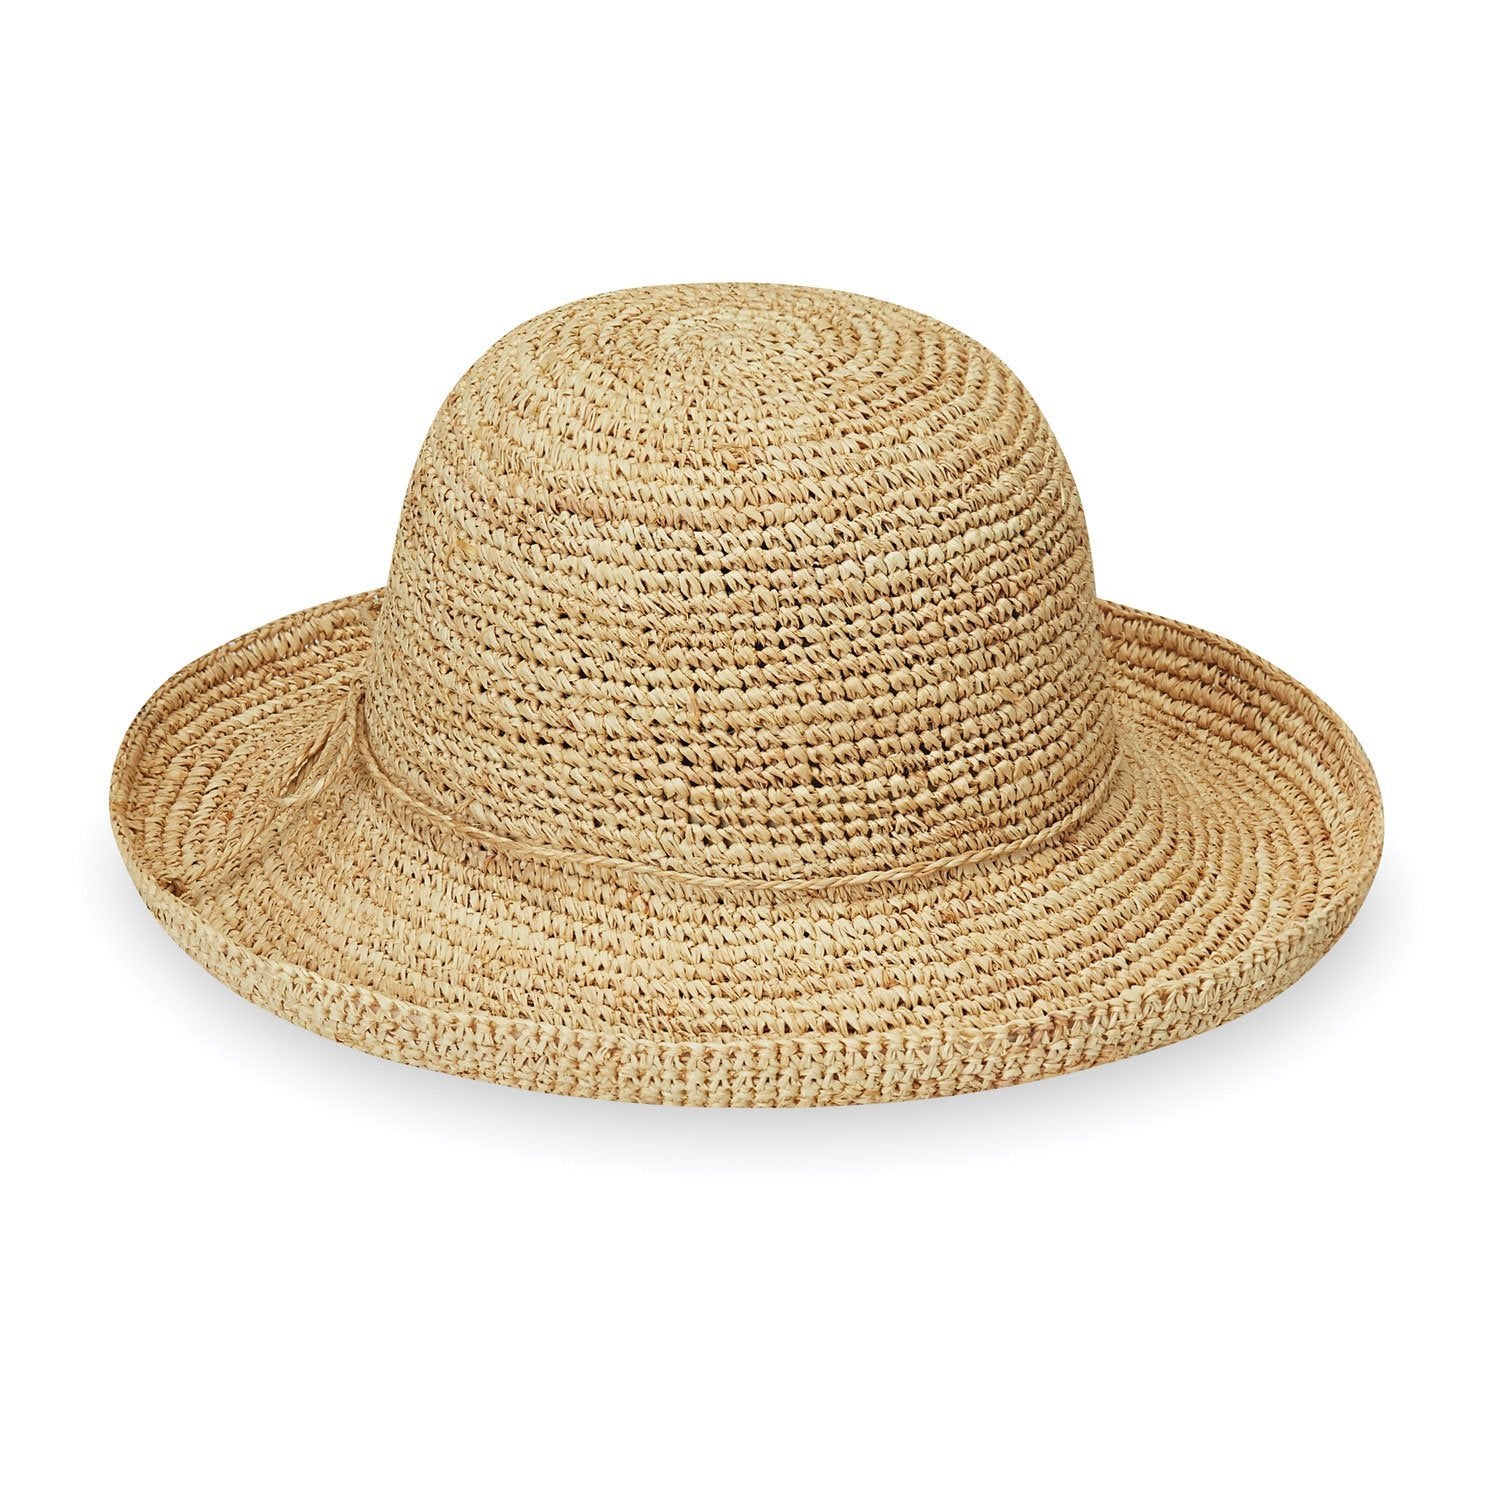 Featuring Front of Women's Big Wide Brim Petite Catalina straw Sun Beach Hat from Wallaroo